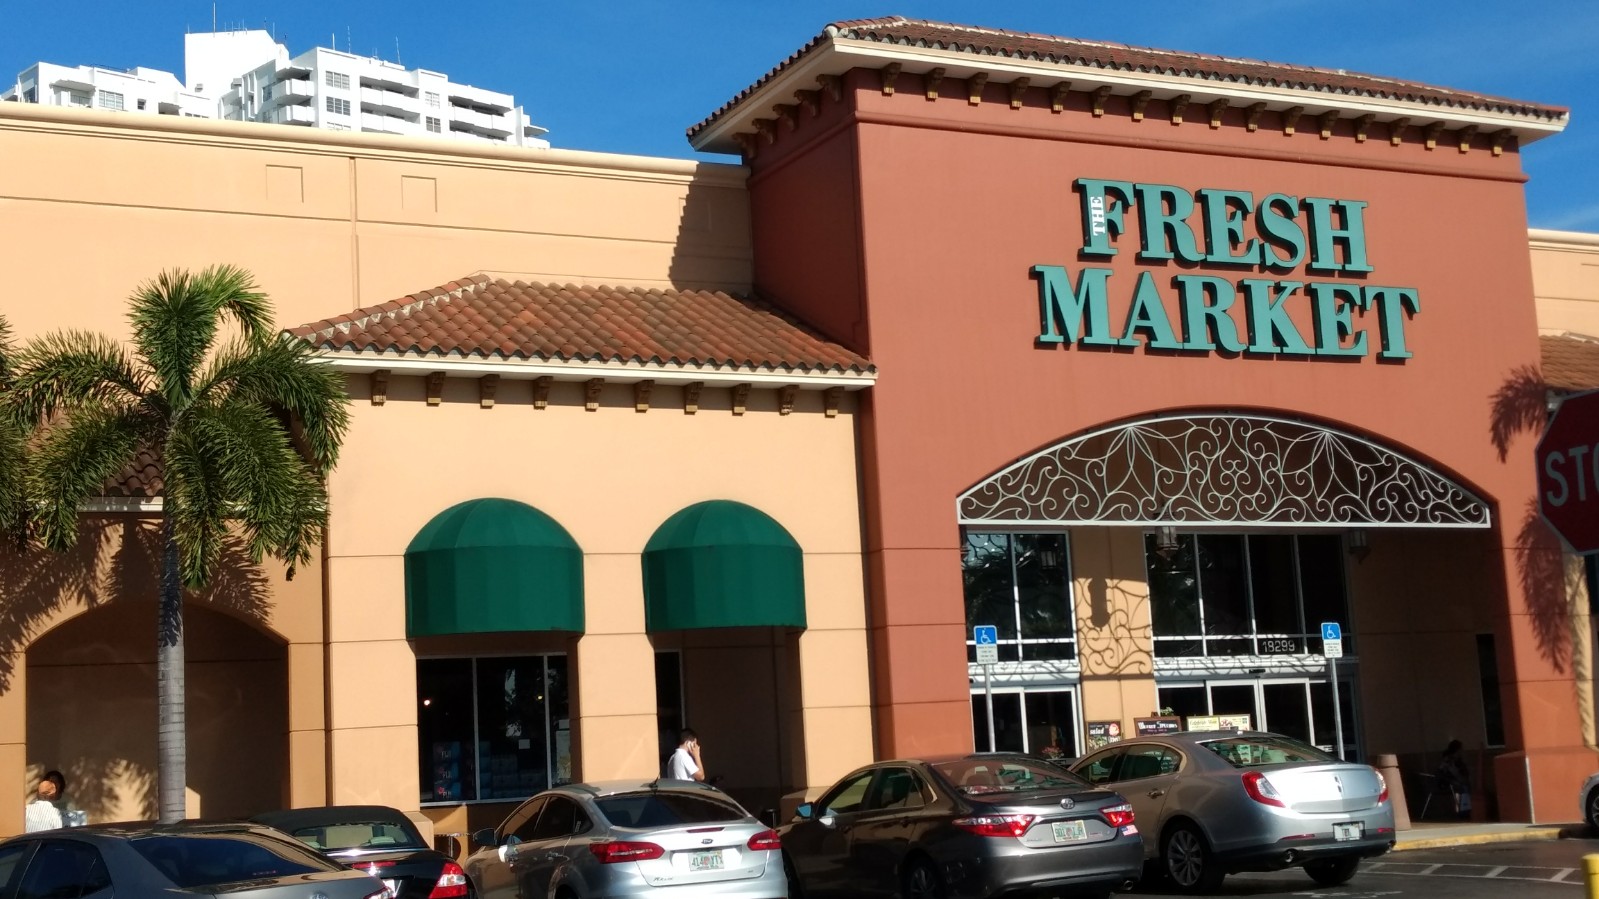 The Fresh market: Otra opción de comida natural en MIAMI